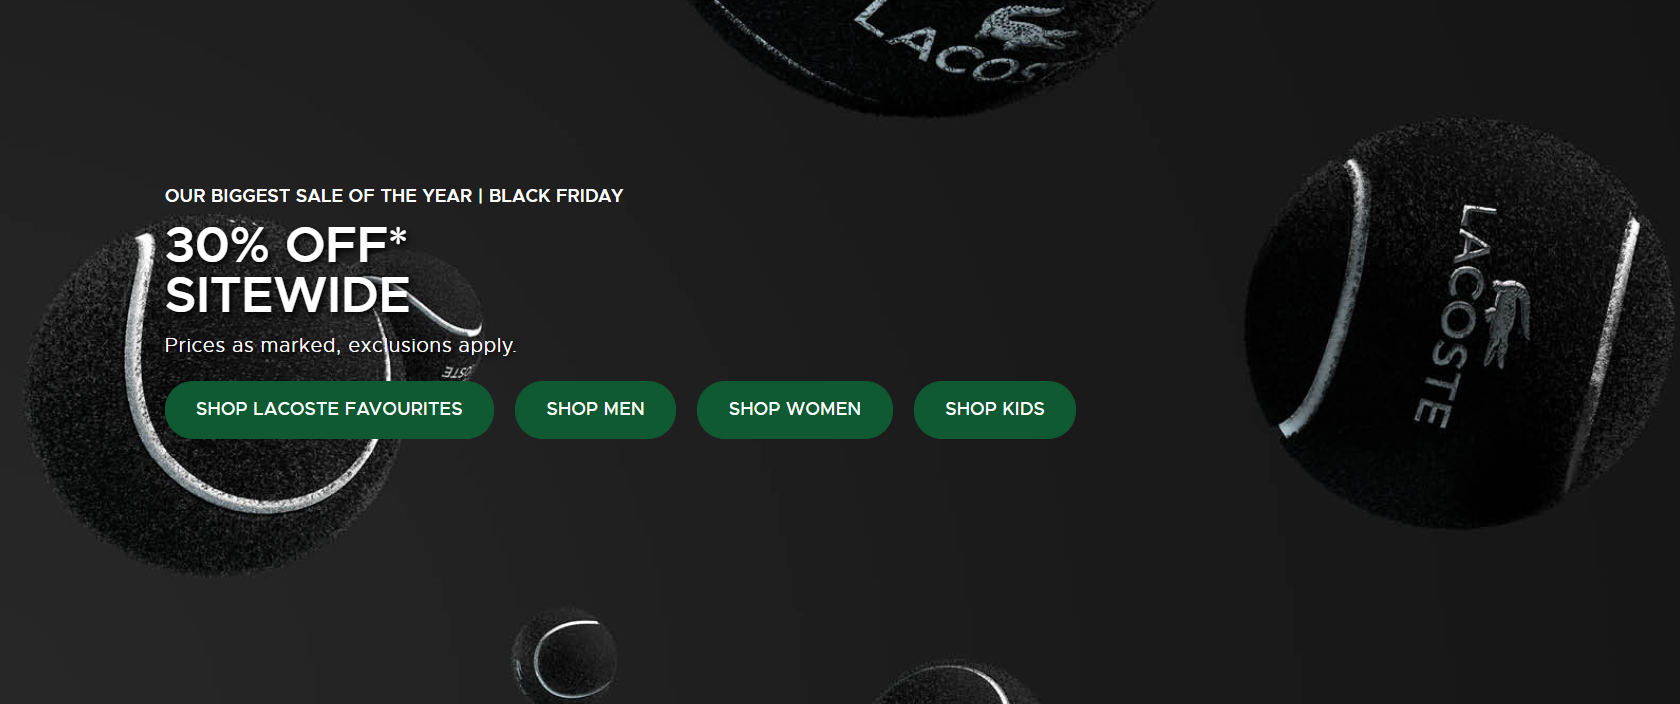 Lacoste Black Friday sale 30% OFF stitewide including men, women & kids styles